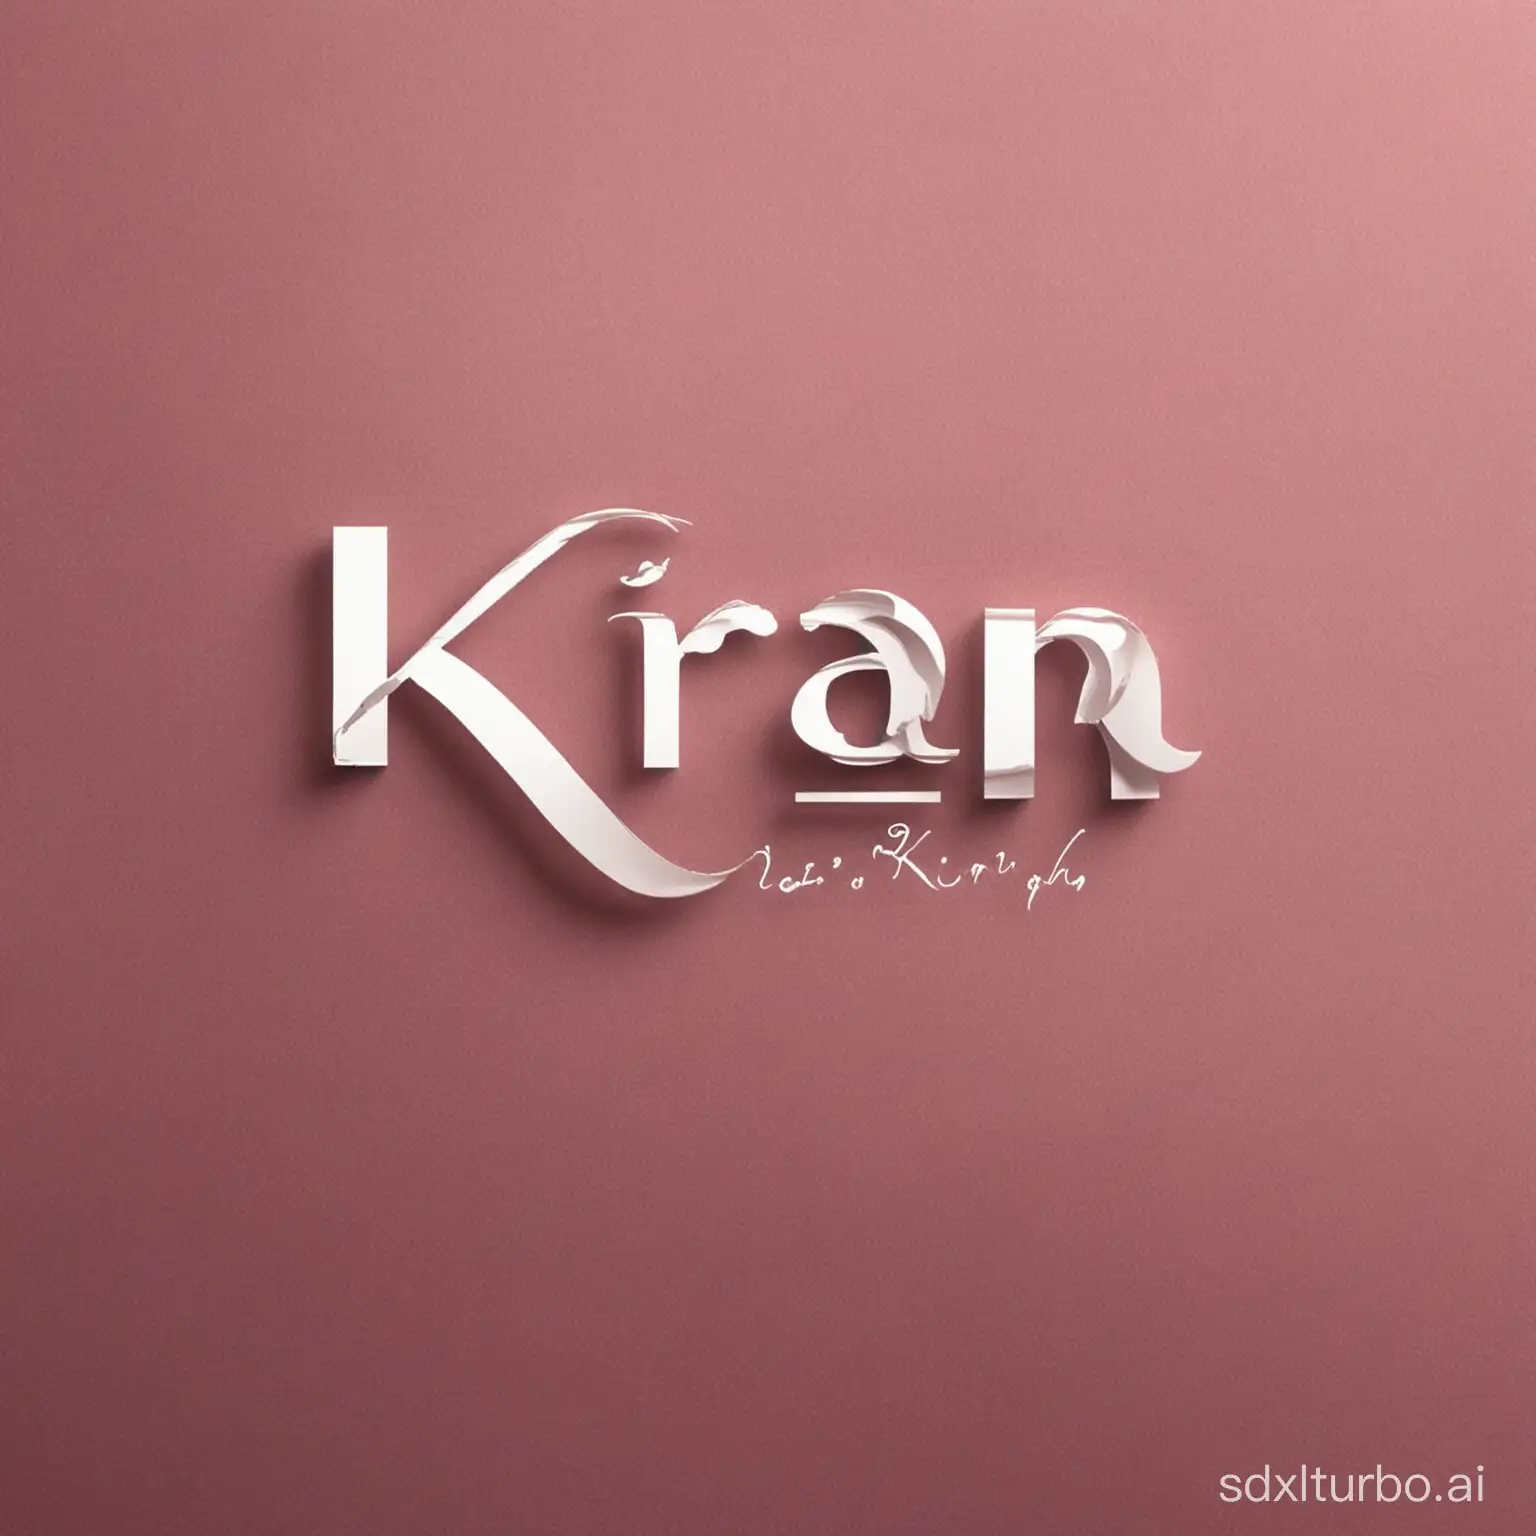 Image with my name Kiran as logo